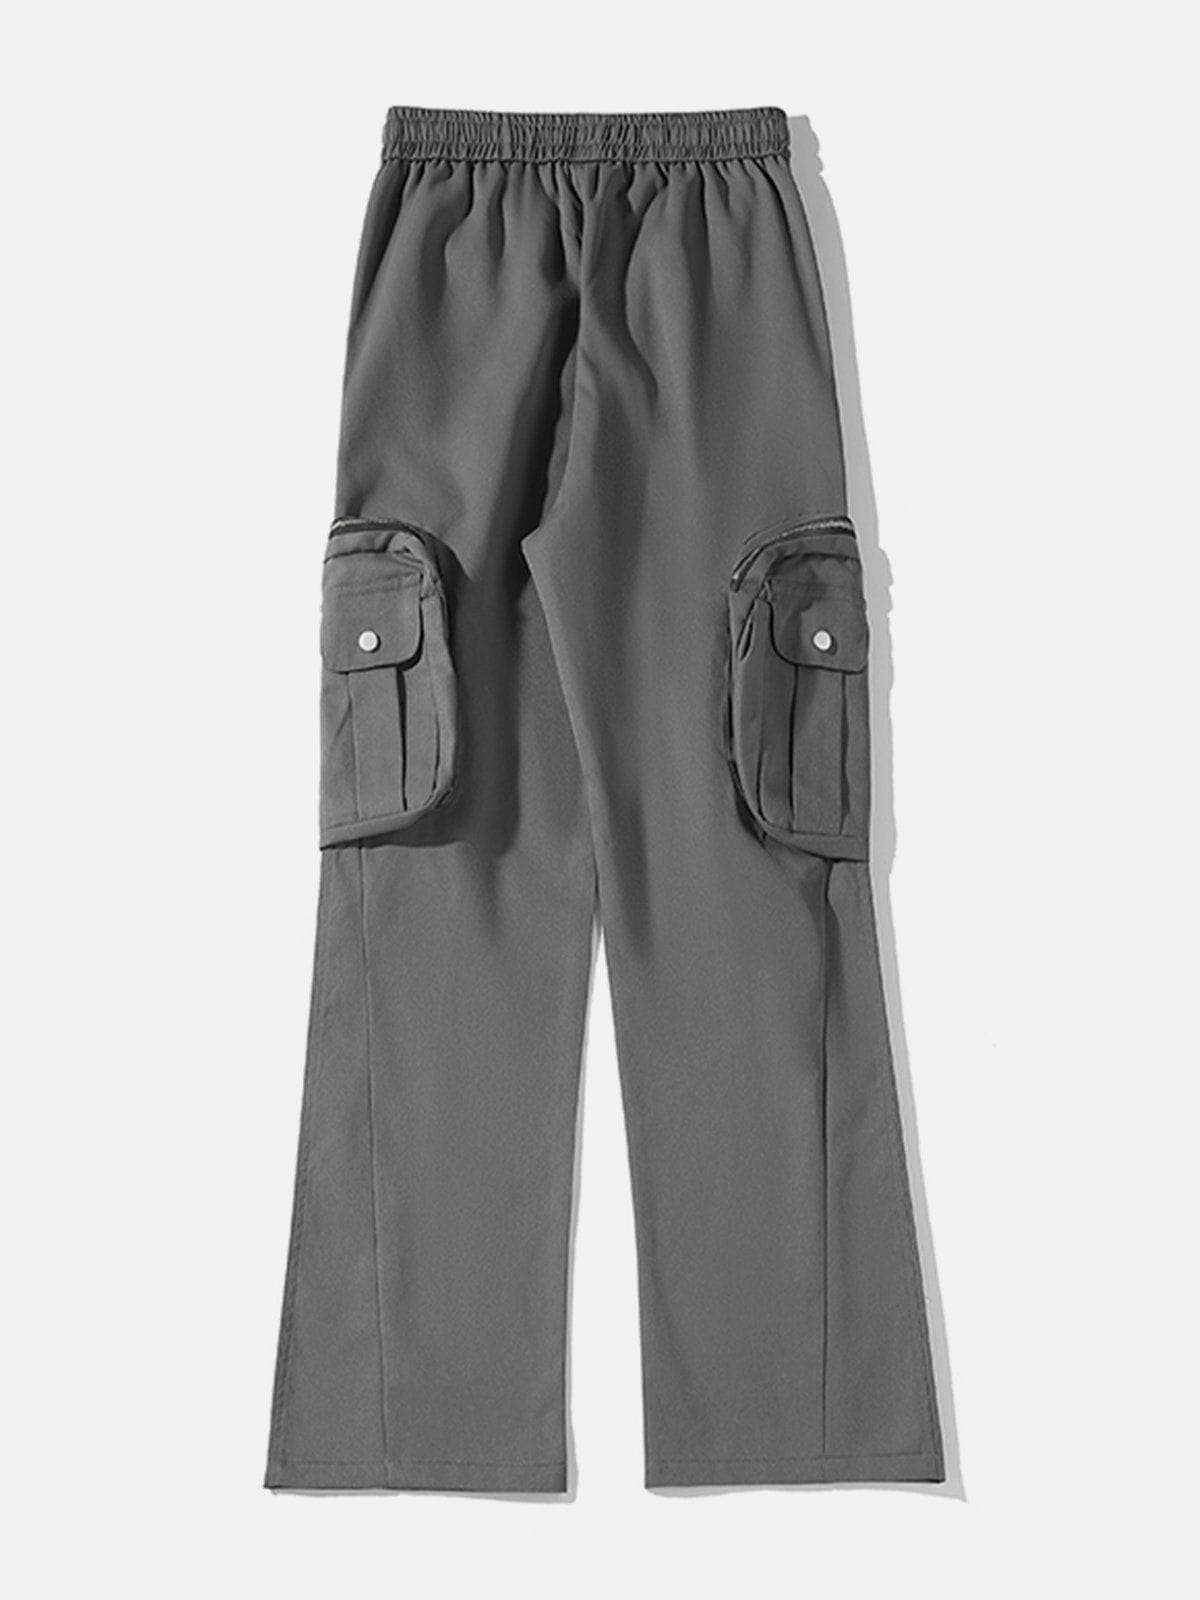 Sneakerland® - Zip Multi-Pocket Cargo Pants